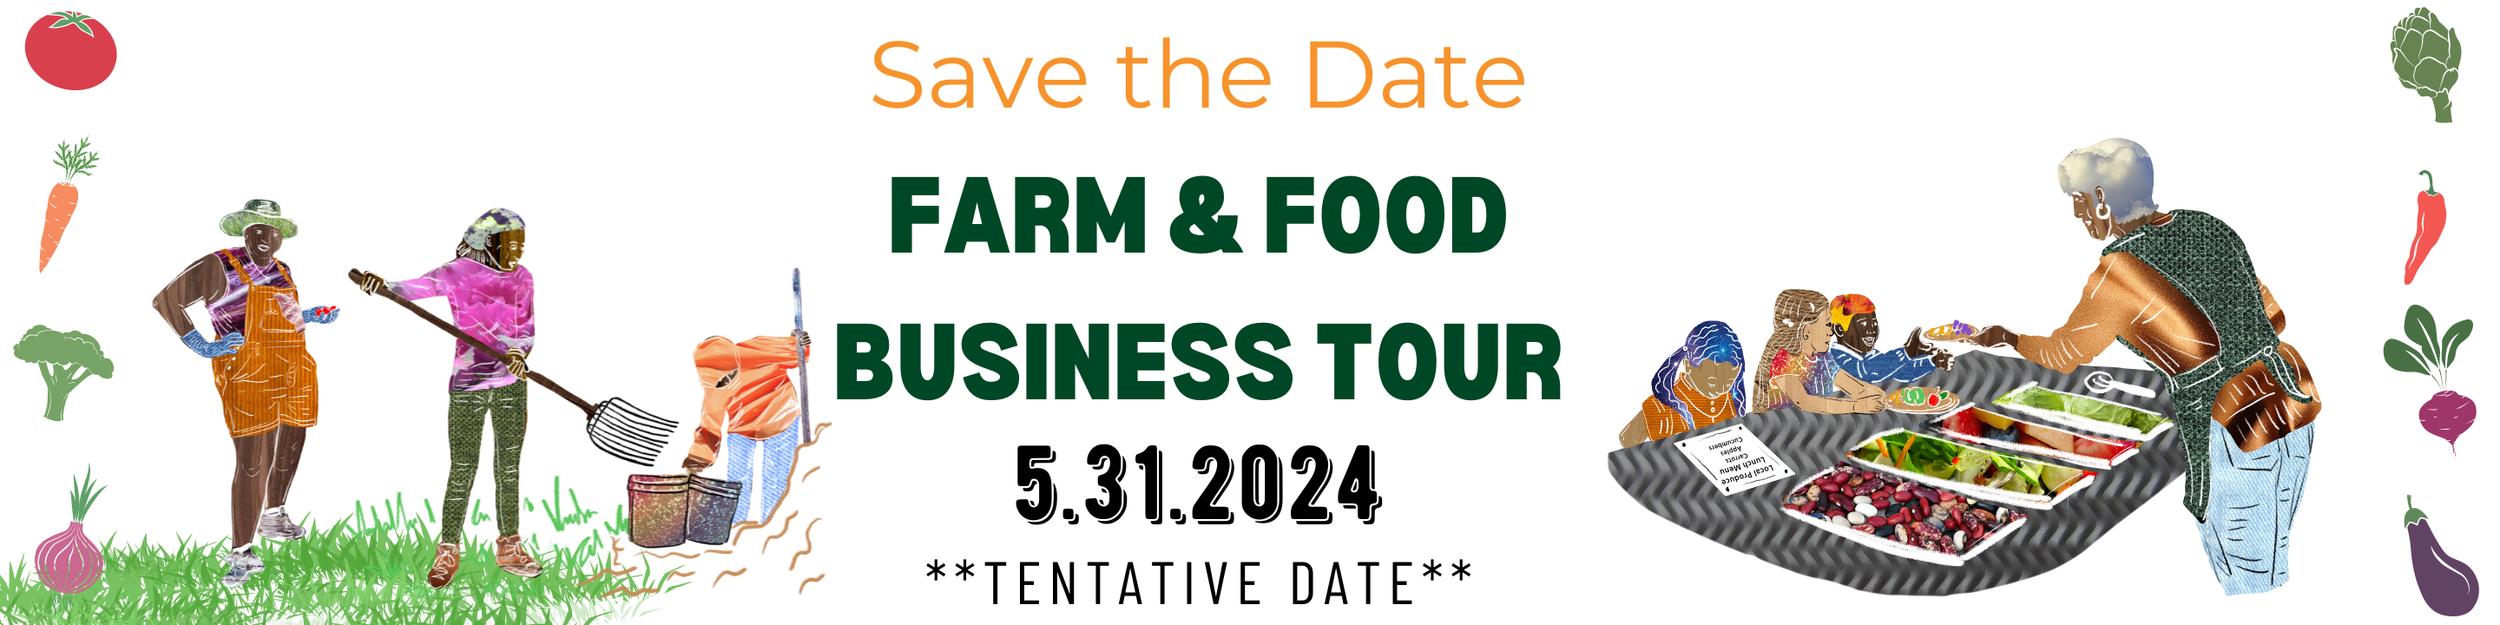 Farm & Food Business Tour Headline (1).png